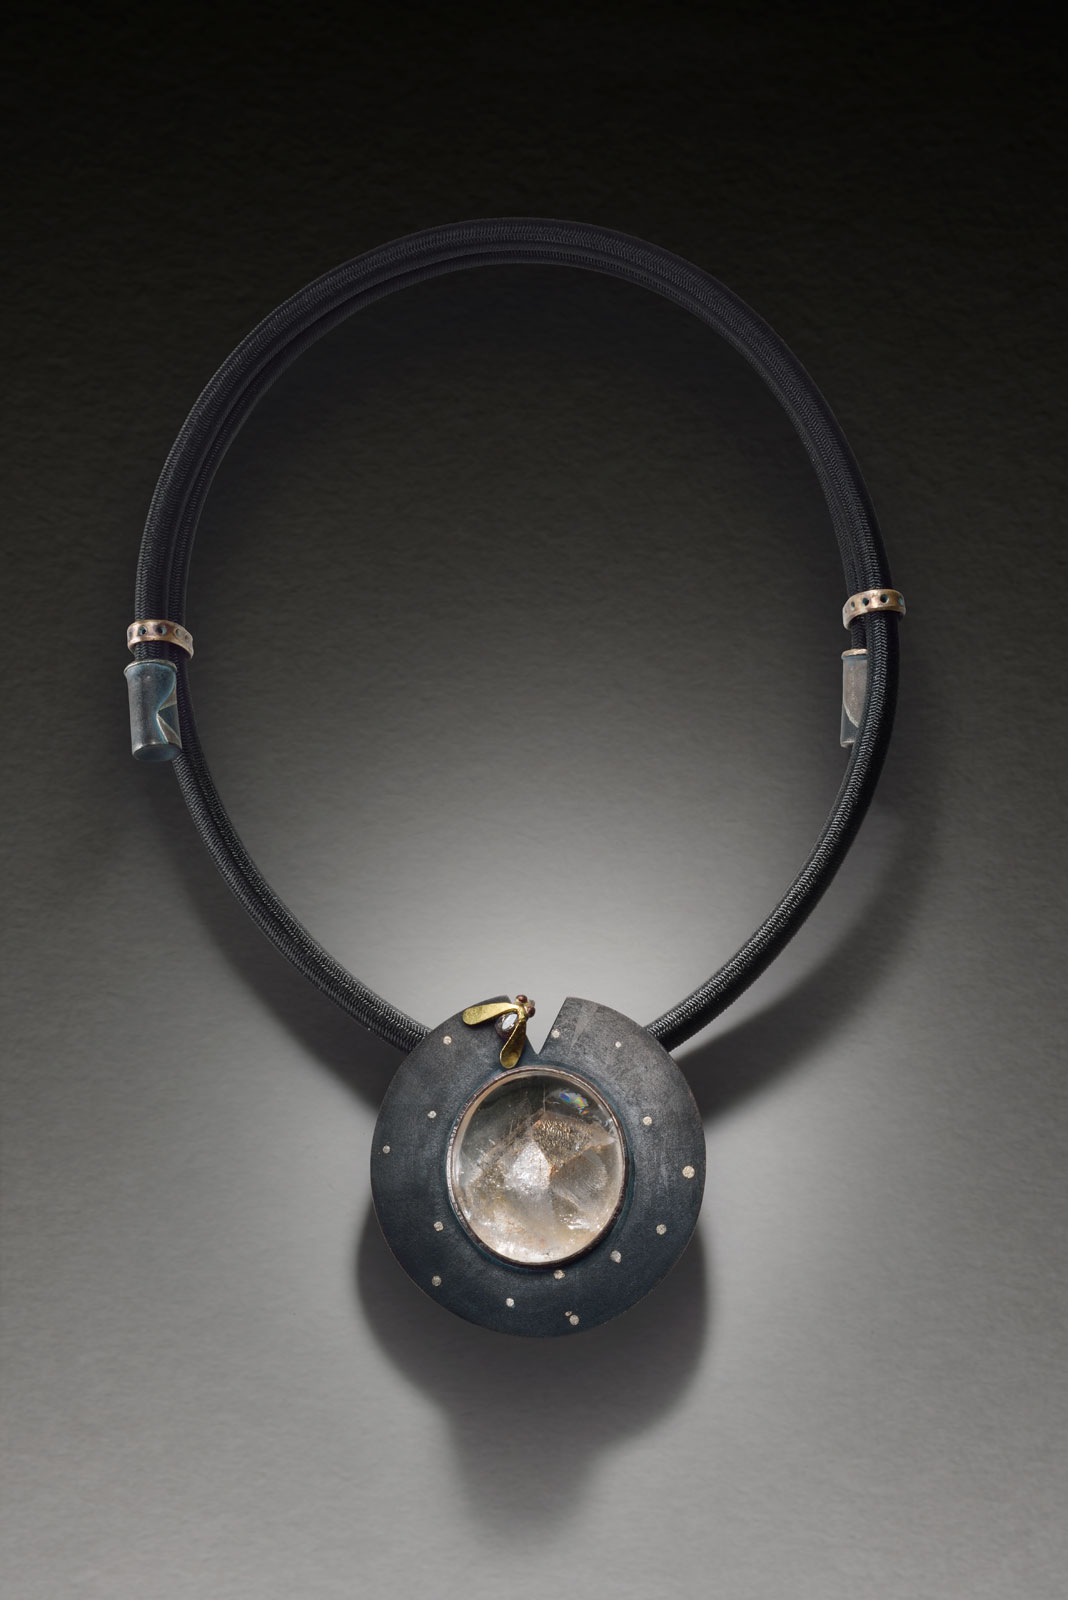 Glitzs Jewels Sterling Silver Black Simulated Diamond Accent Designer Key Necklace